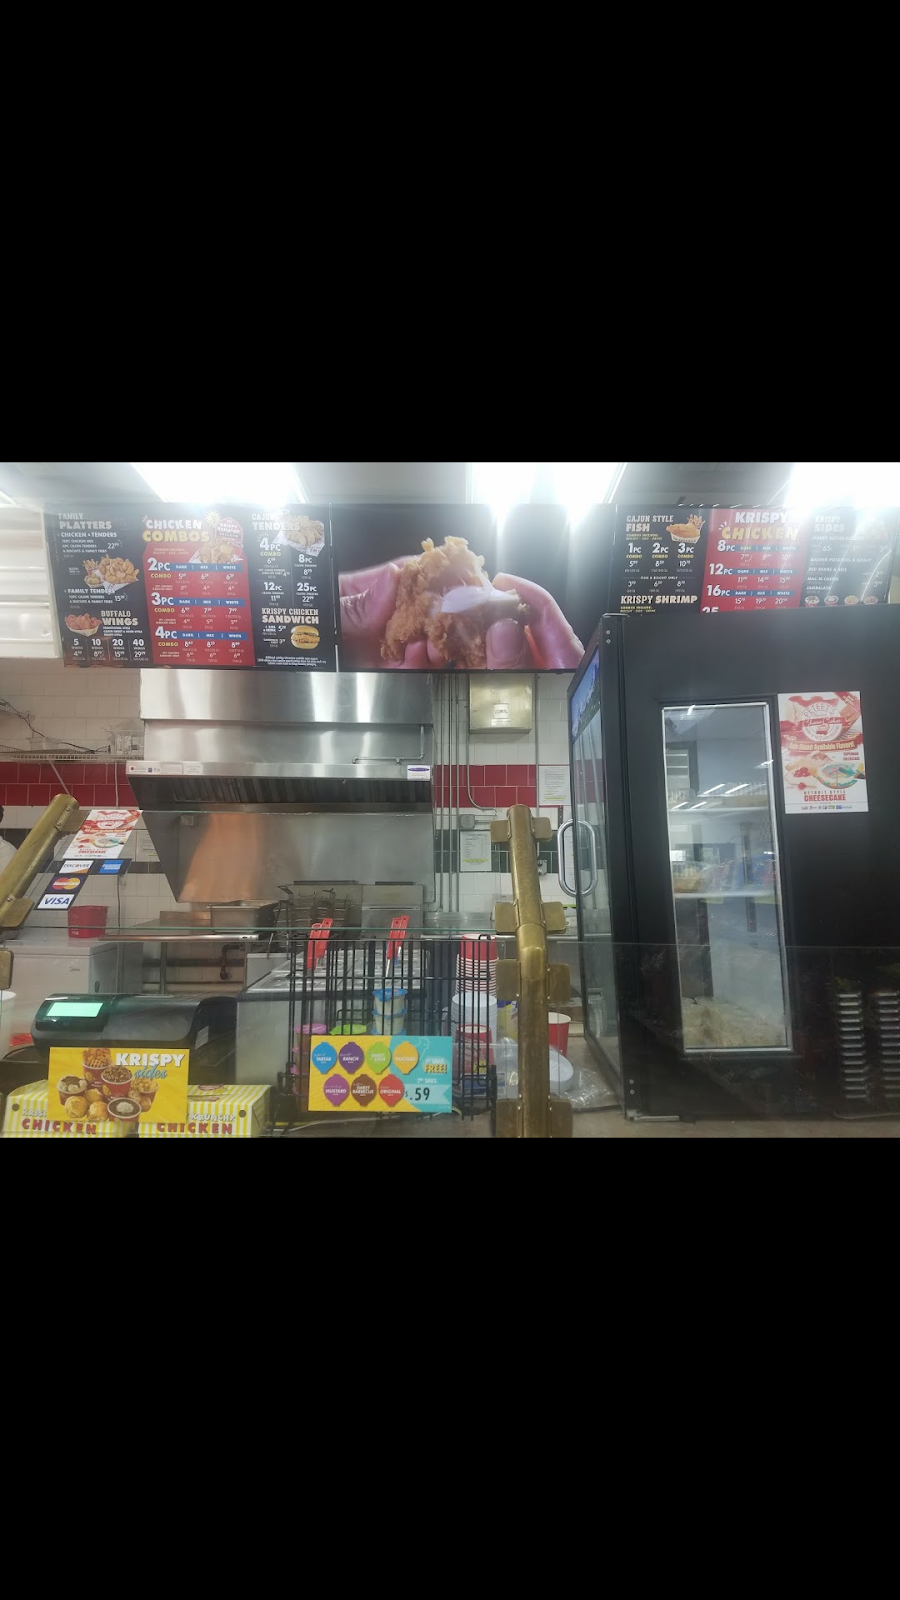 Krispy Krunchy Chicken | 29403 Michigan Ave, Inkster, MI 48141, USA | Phone: (734) 331-4499